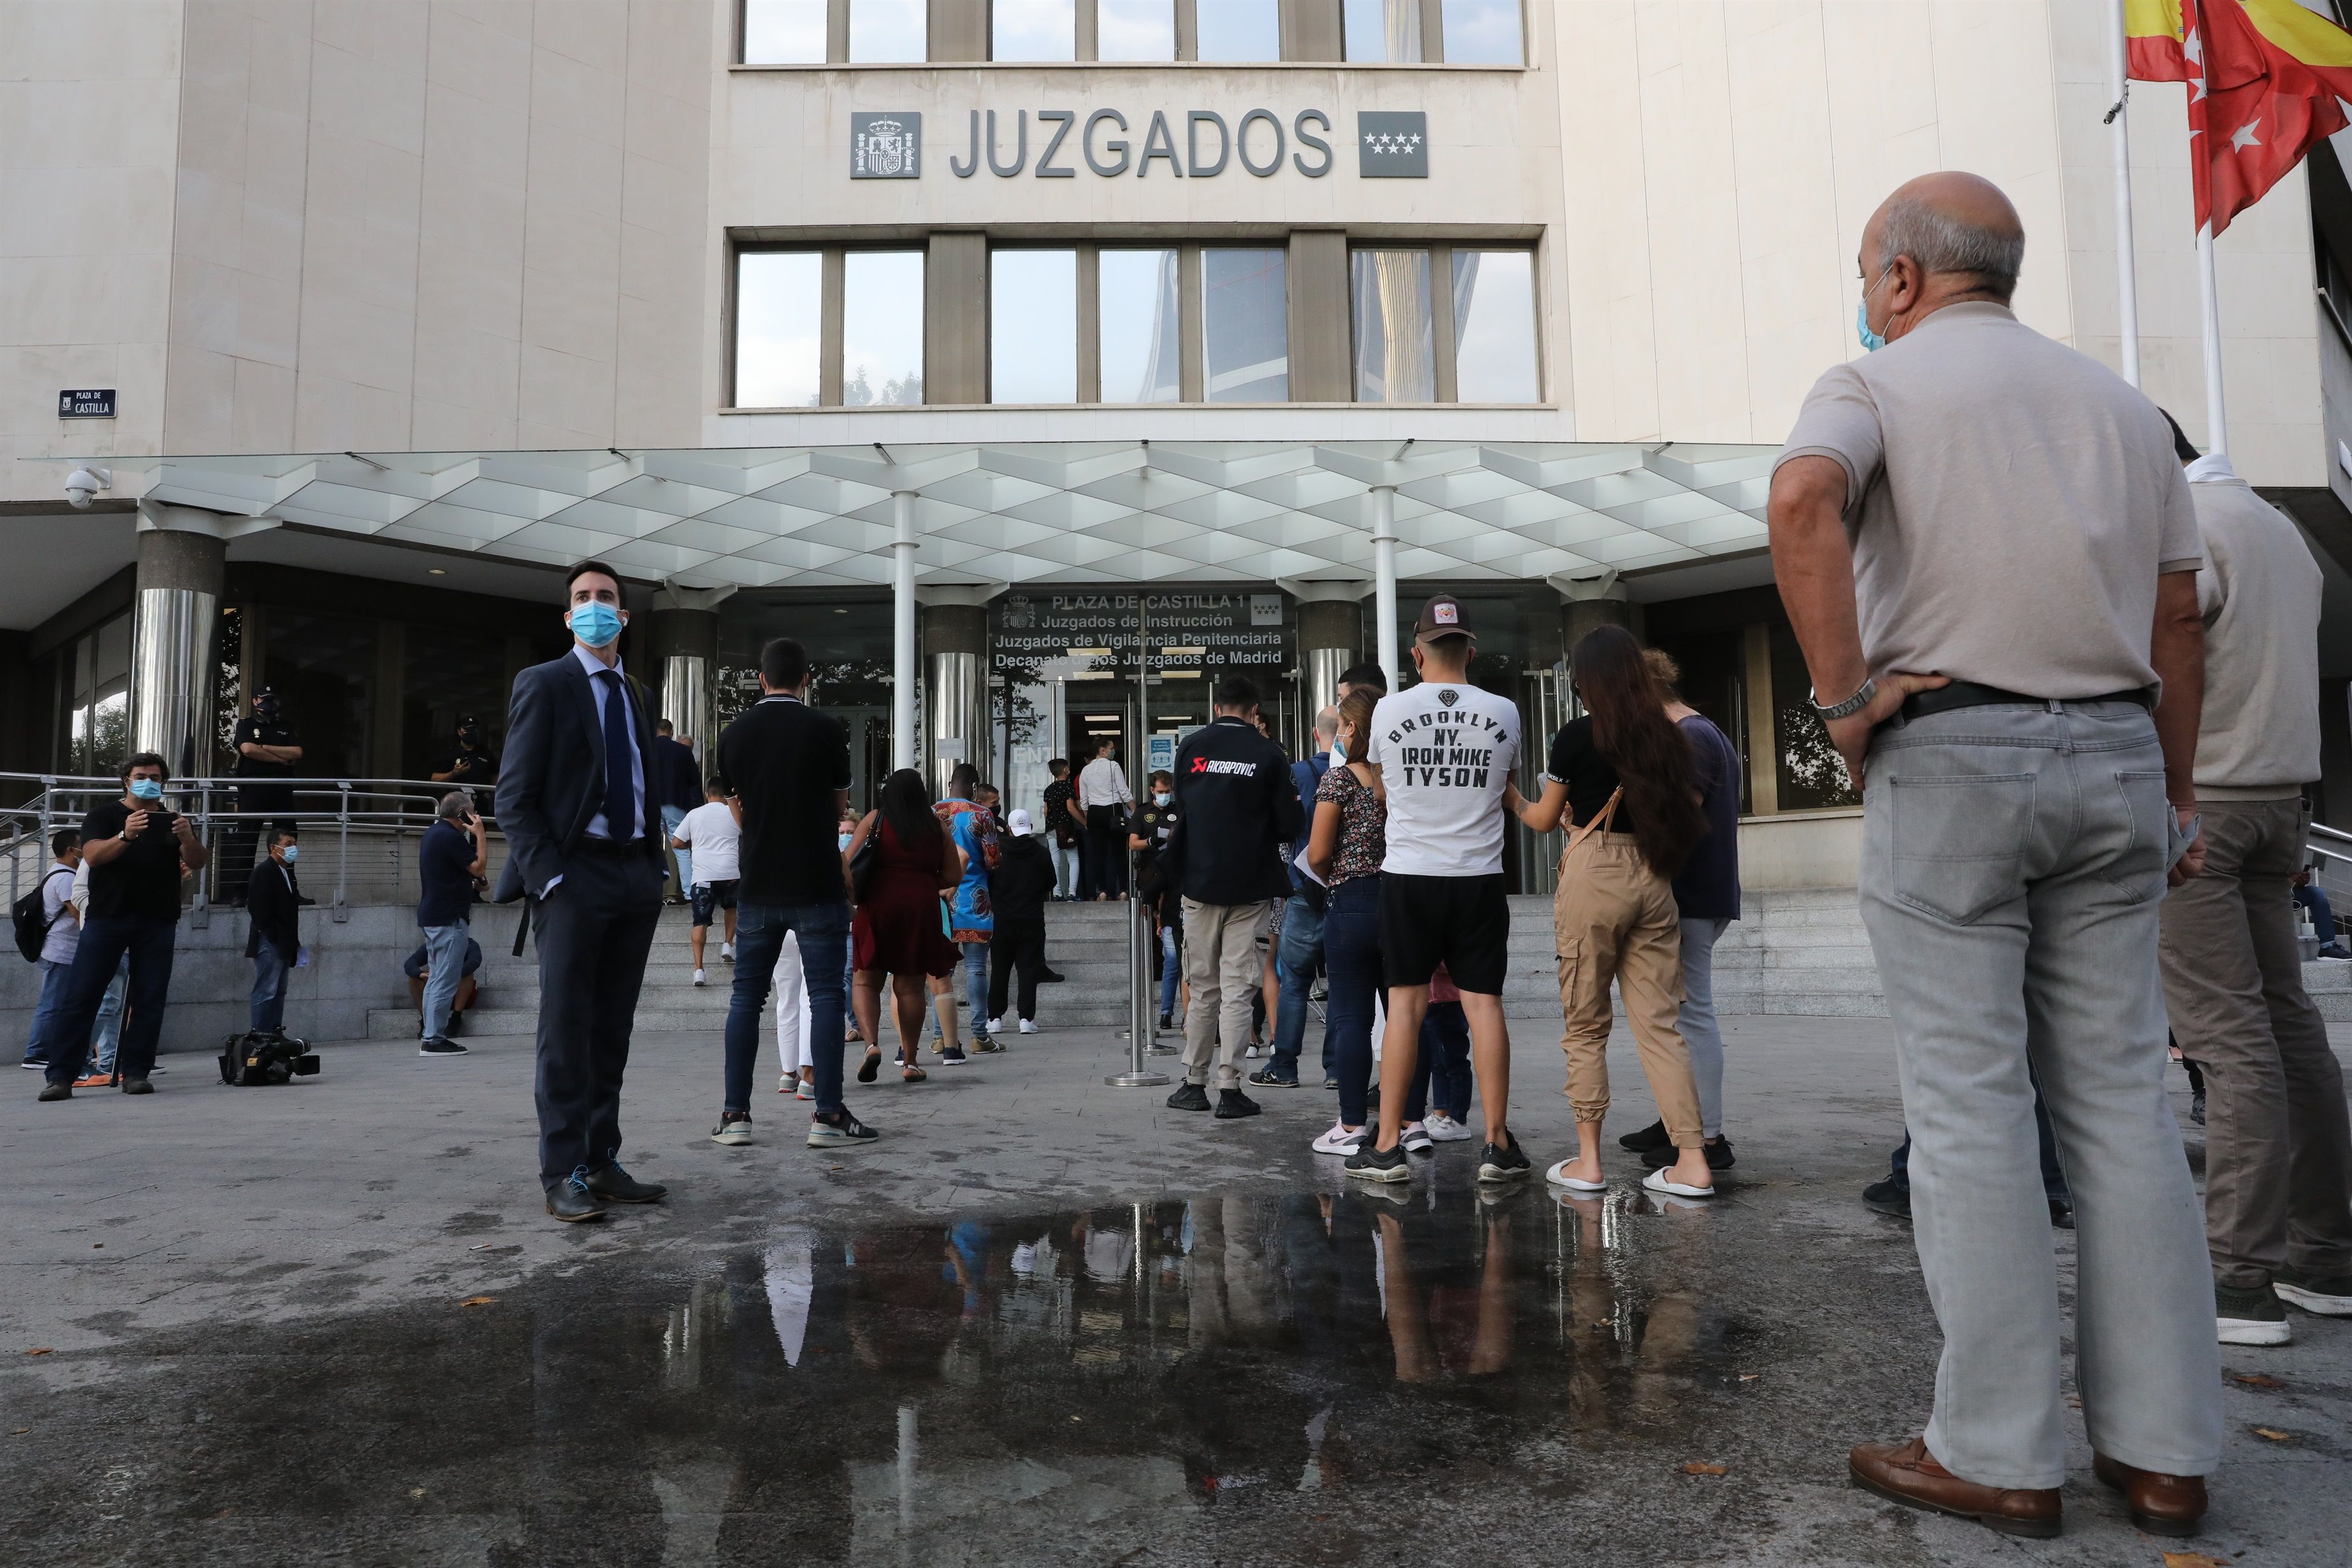 Juzgados de Plaza Castilla. Foto: Europa Press 